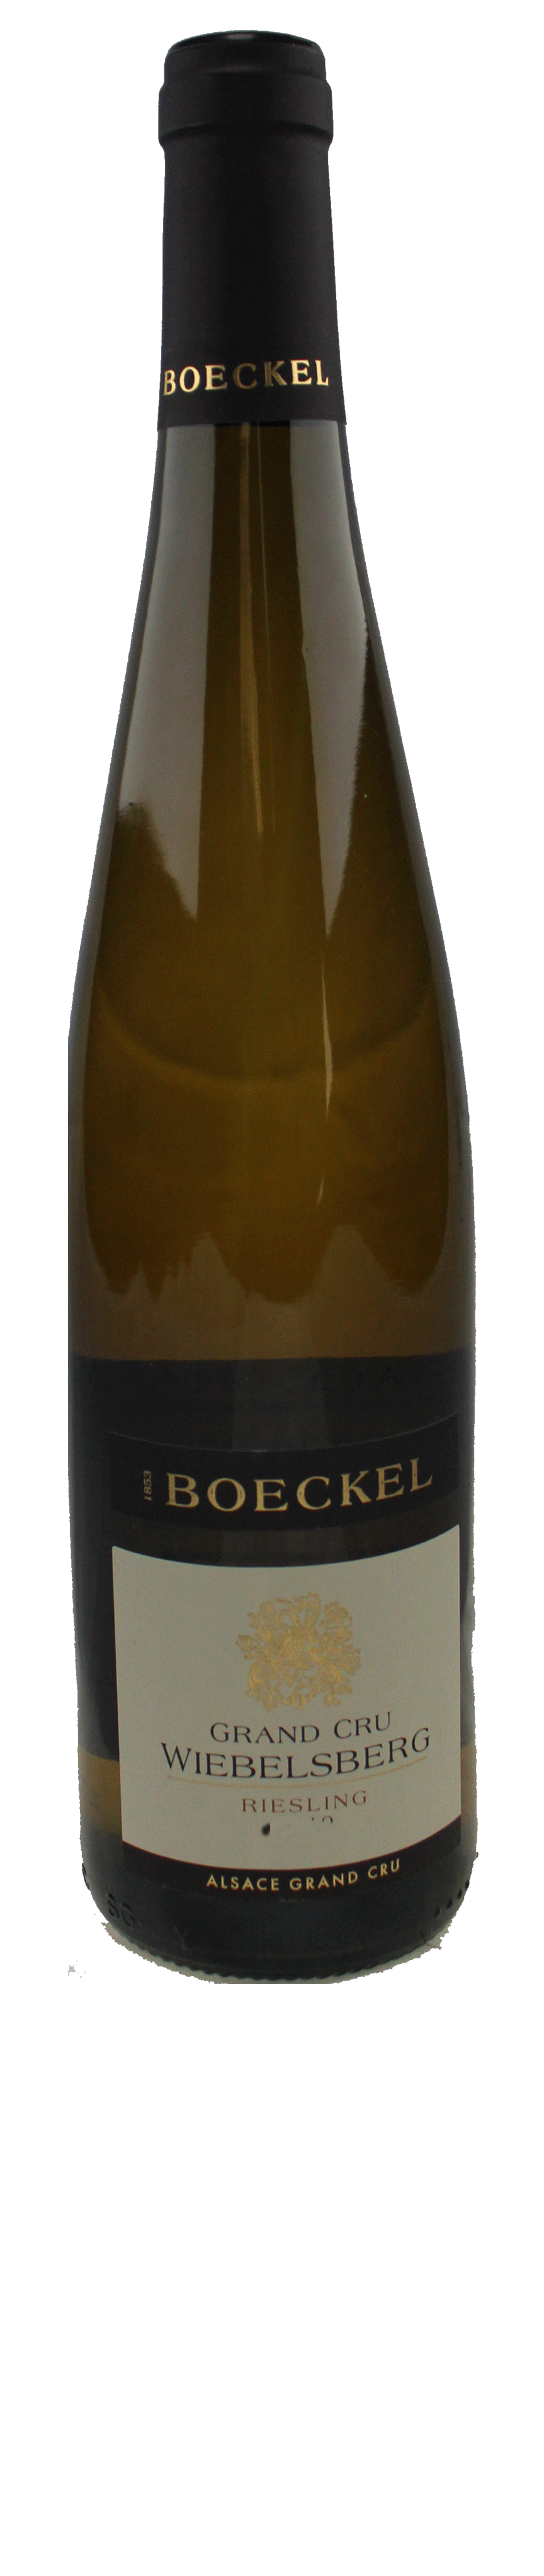 Bottle shot of 2012 Riesling Grand Cru Wiebelsberg